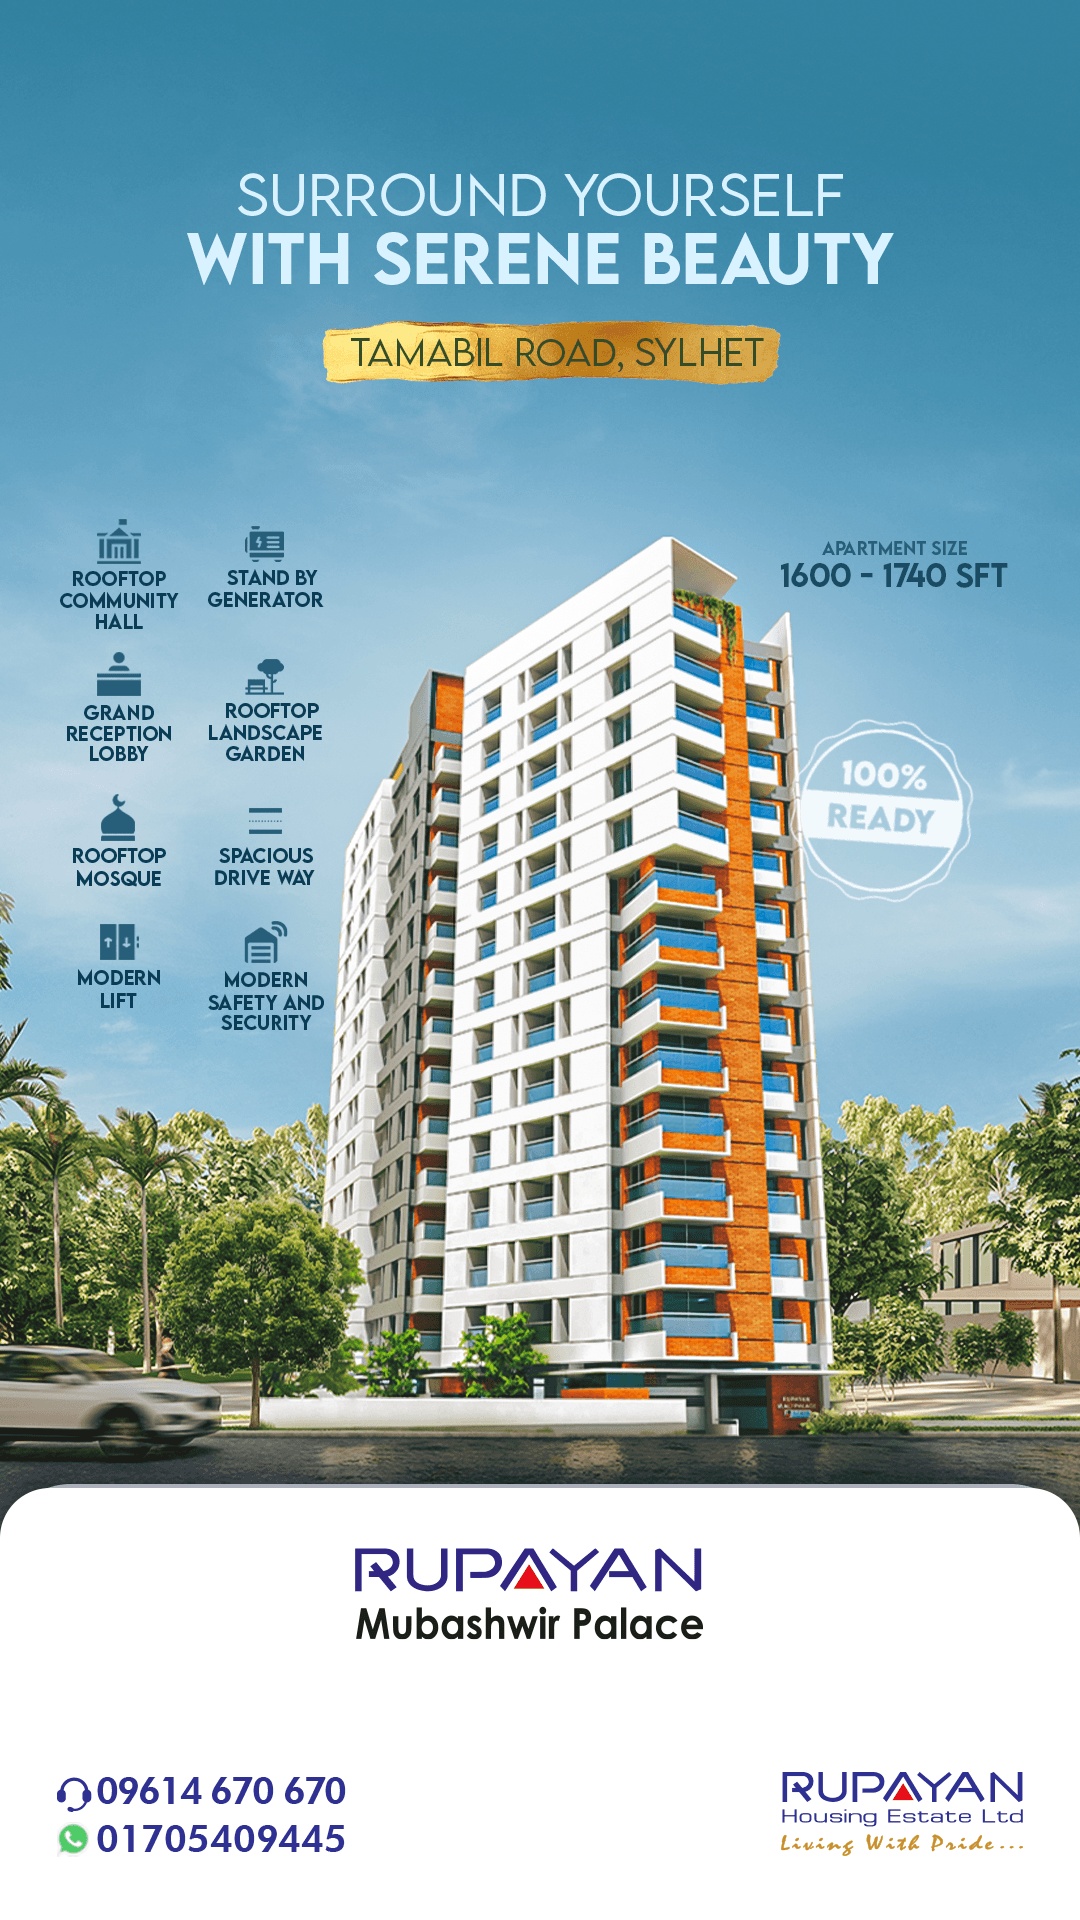 Advertising  real estate housing residential graphic design  properties Social media post marketing   Bangladesh India